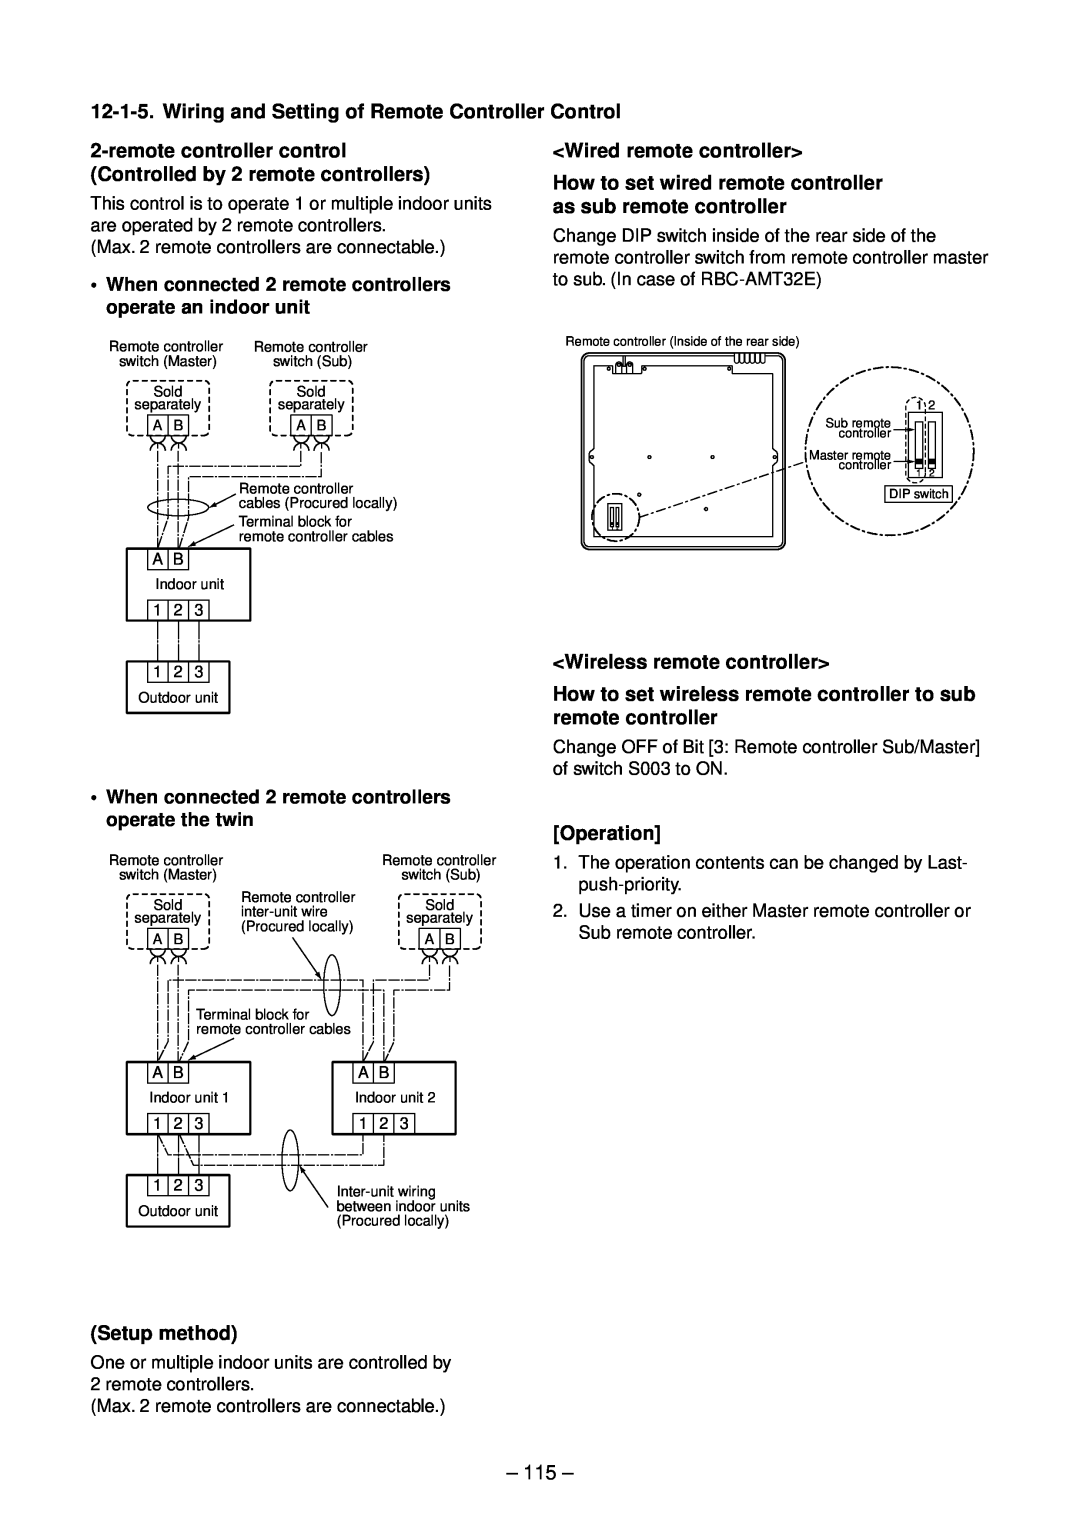 Toshiba RAV-SP564ATZ-E Wiring and Setting of Remote Controller Control, Wired remote controller, Operation, Setup method 